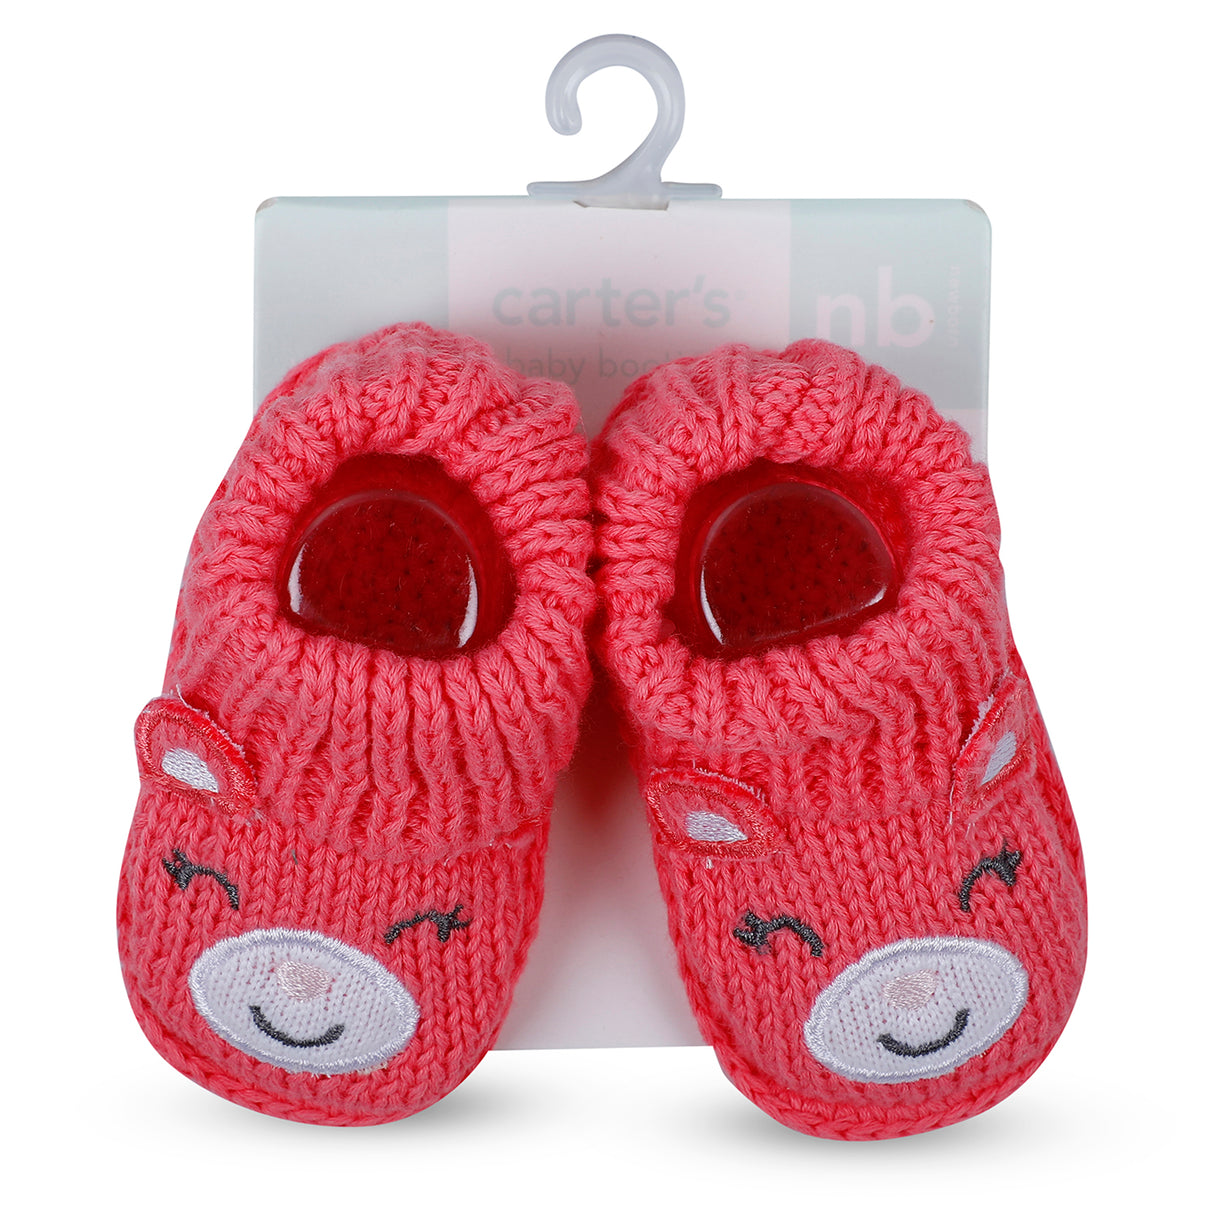 Lion Bear Newborn Crochet Socks Booties